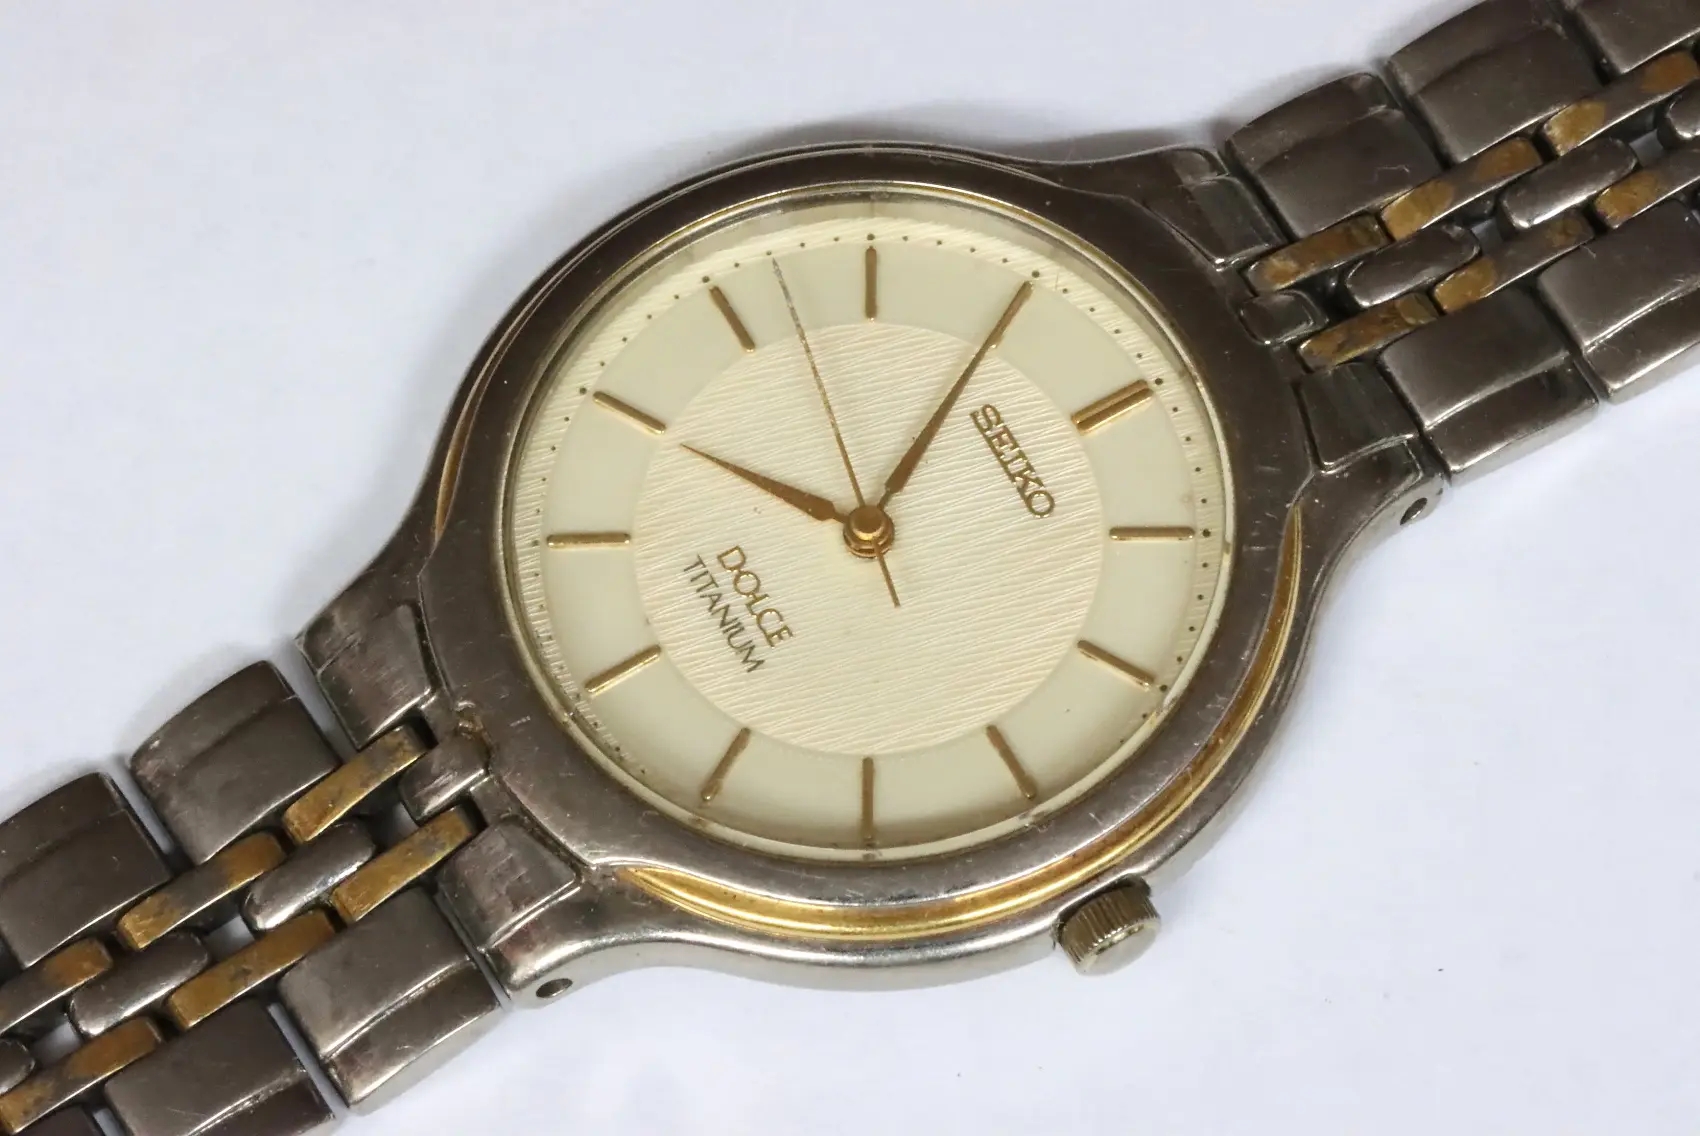 Seiko 8J41-6120 dolce titanium midsize watch needs new capasitor 